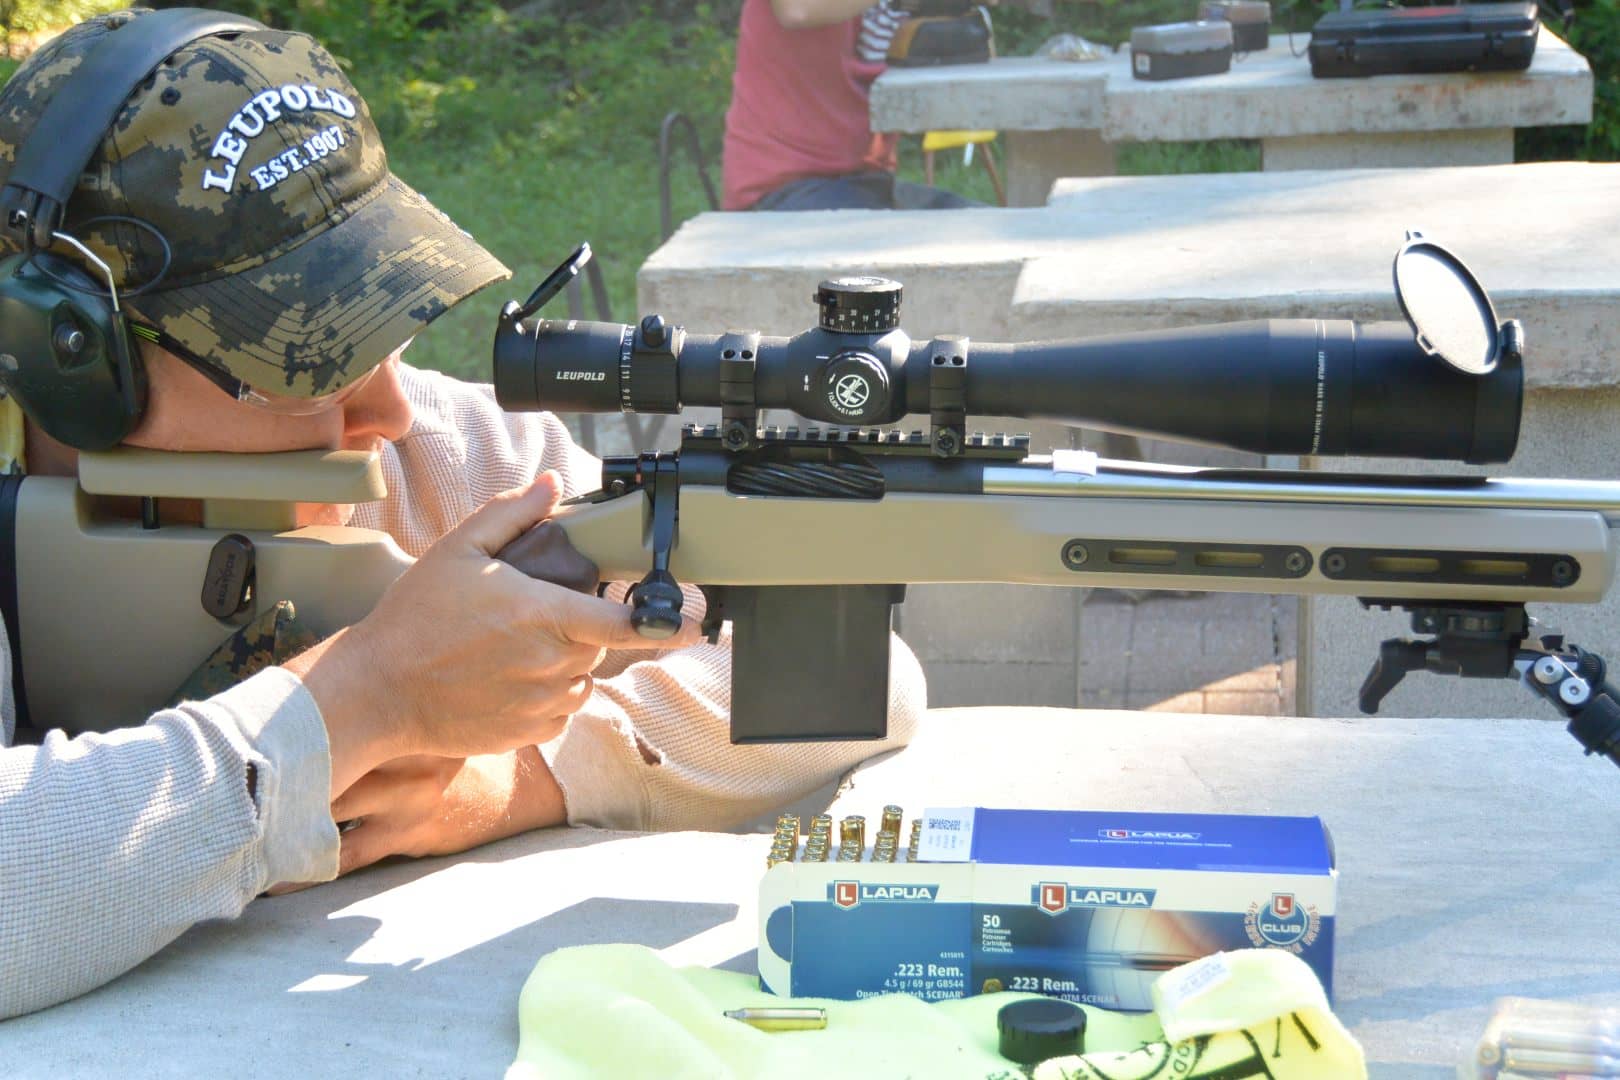 https://u.cubeupload.com/BigJimFish/2021711mark5kelblyla.jpg
Competition day with the Leupold Mark 5HD 5-25x56 on the Kelbly's Atlas Tactical rifle in a Grayboe Ridgeback stock with Lapua factory ammo
